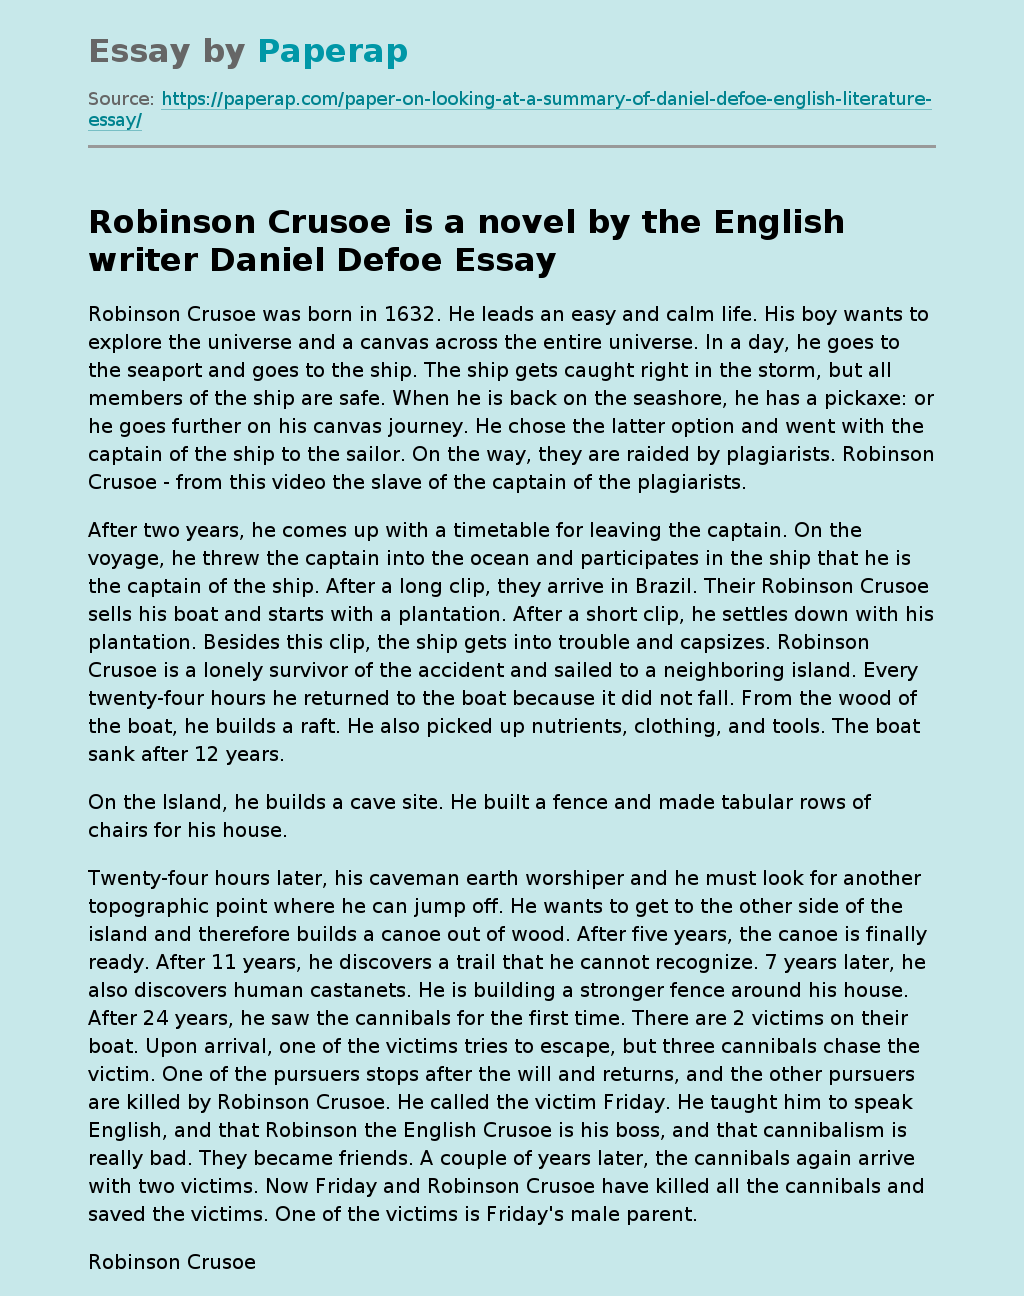 Robinson Crusoe is a novel by the English writer Daniel Defoe